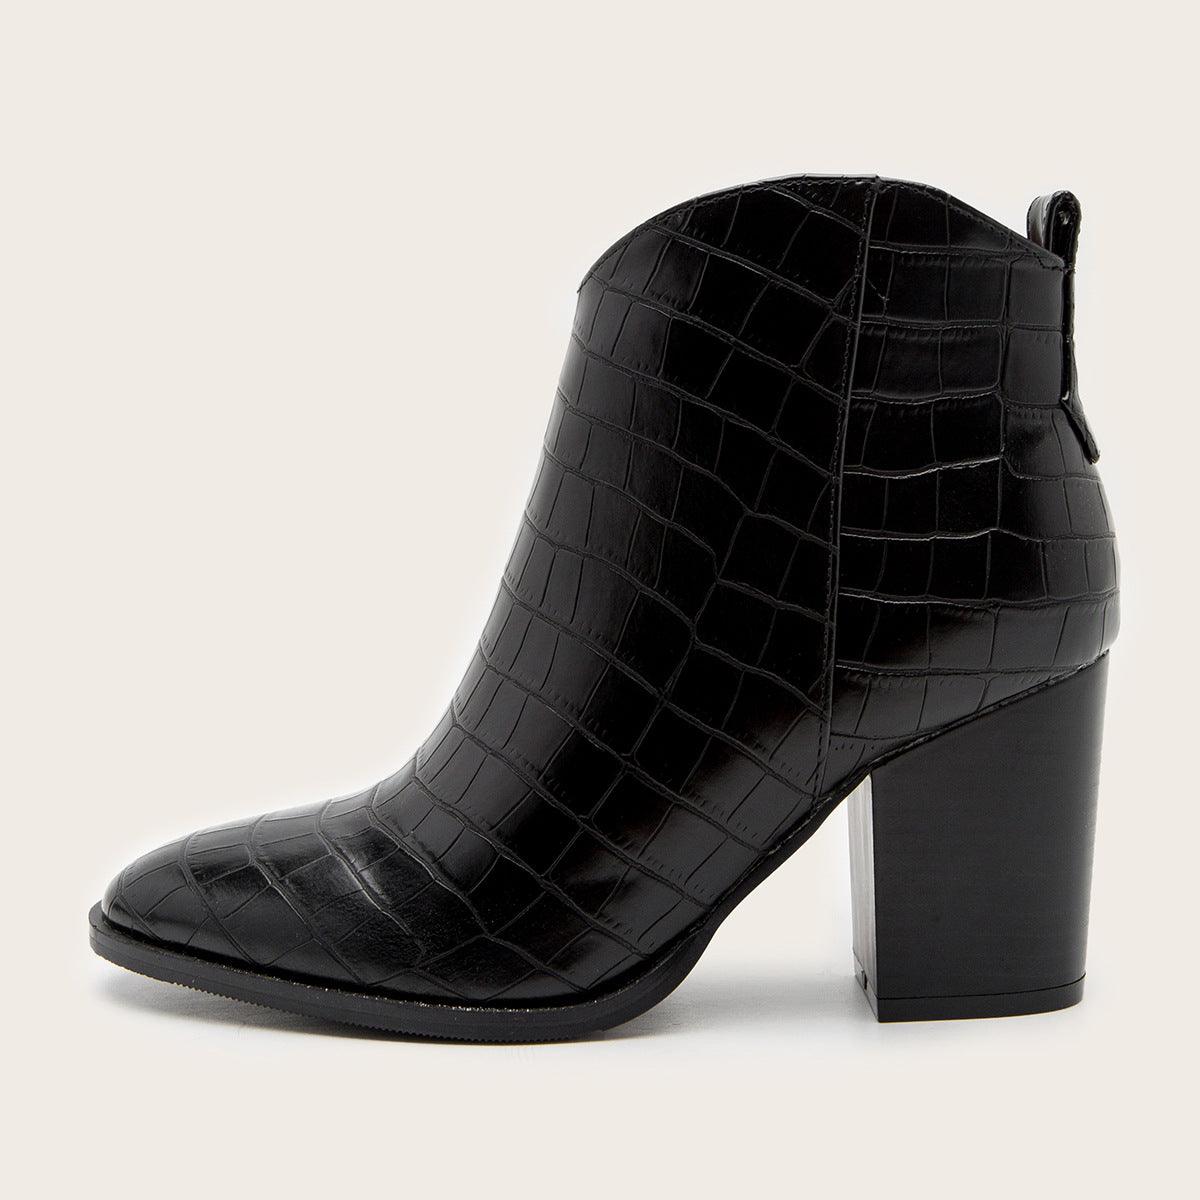 Martins stylish chunky side zipper women's boots - Cruish Home